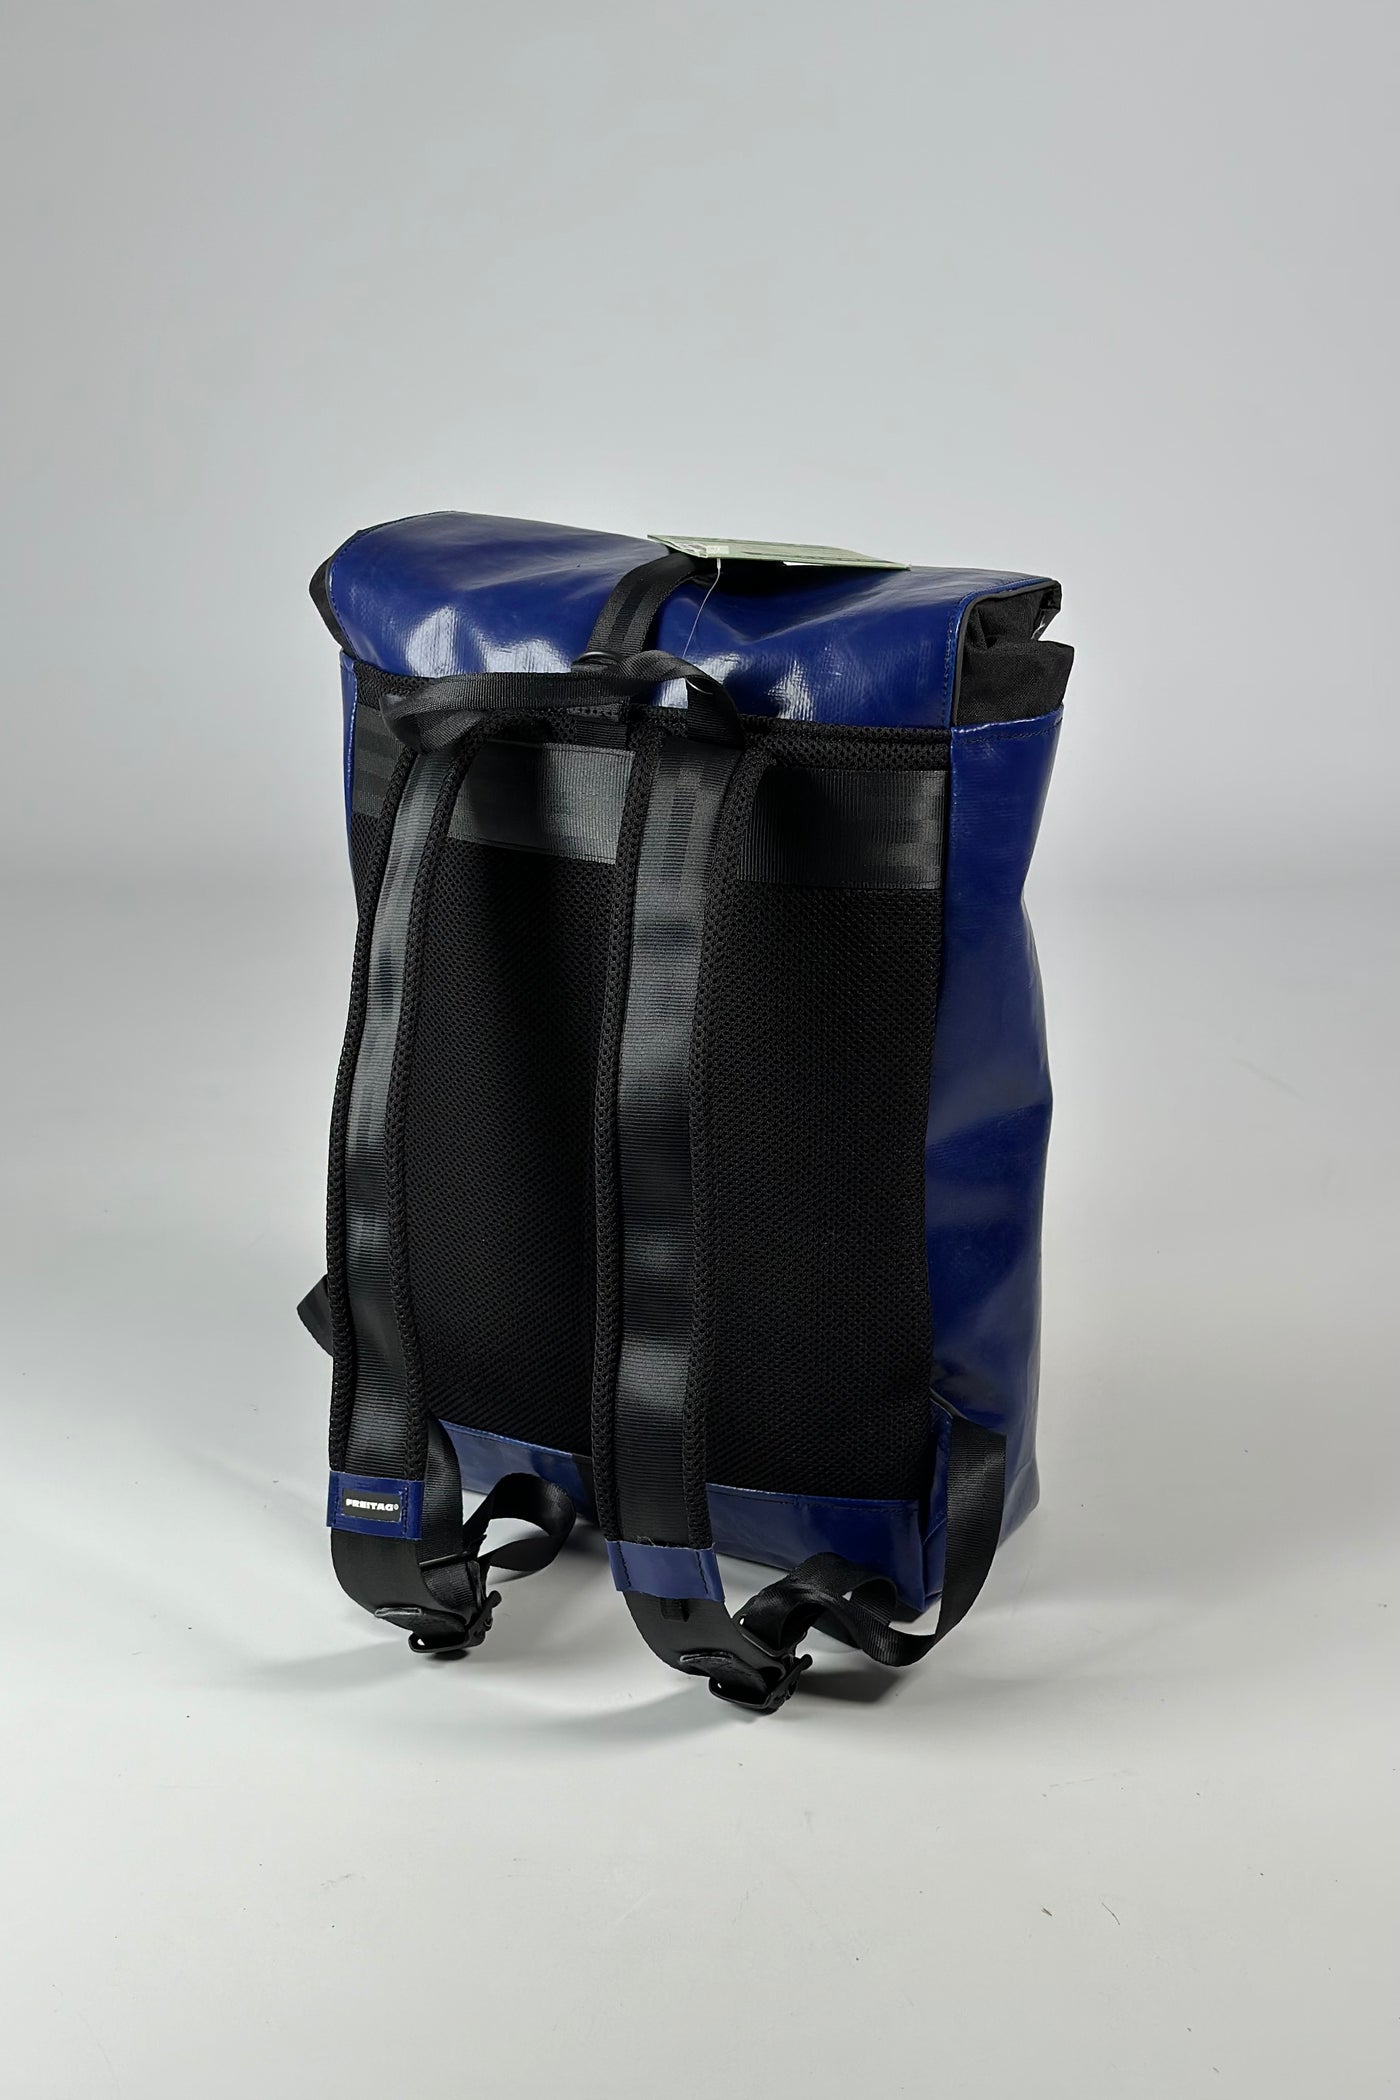 CLAPTON F155 Backpack | FREITAG